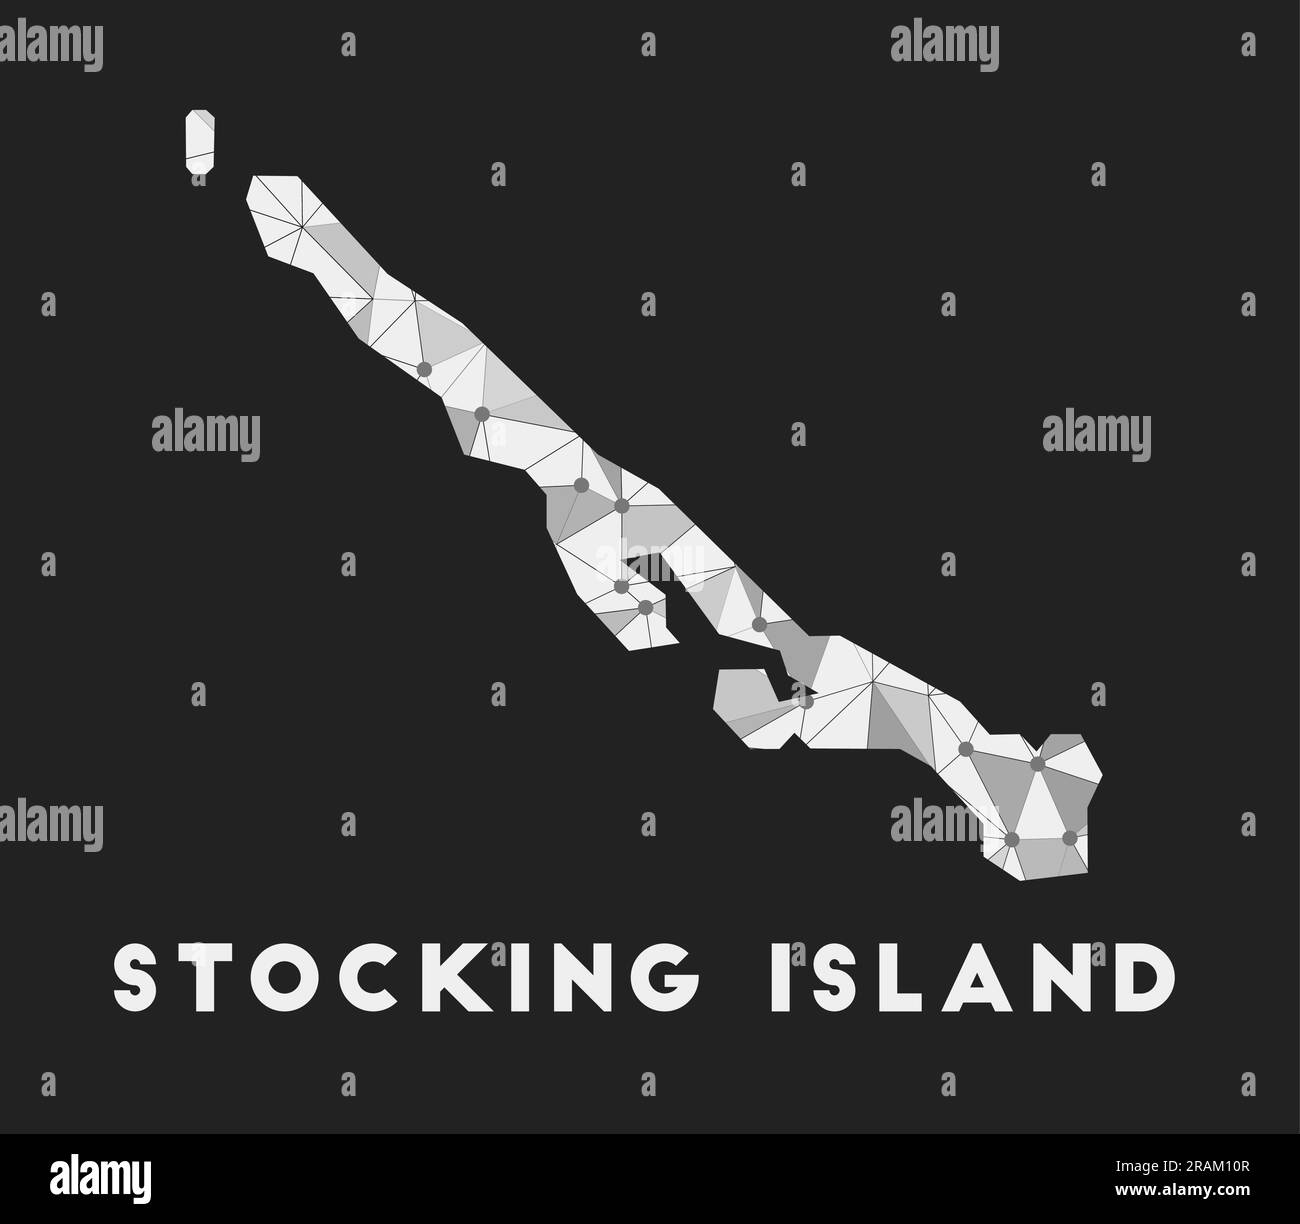 Stocking Island - communication network map. Stocking Island trendy geometric design on dark background. Technology, internet, network, telecommunicat Stock Vector